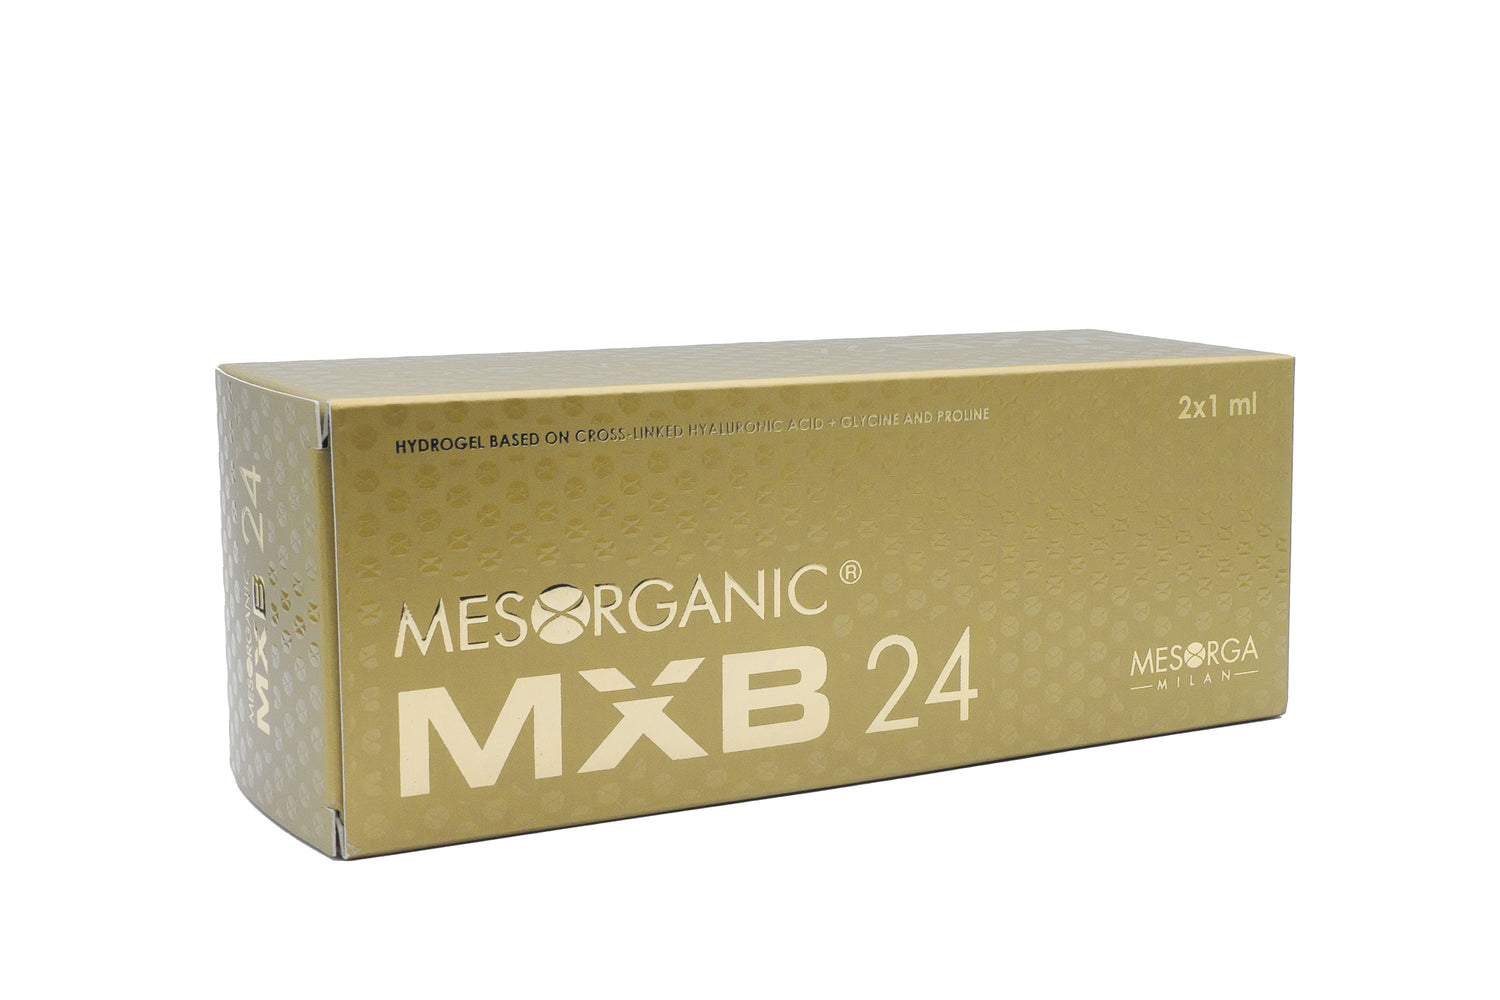 Mesorganic MXB 24 - Cross-linked Hyaluronic Acid + Proline and Glycine - Mesorga